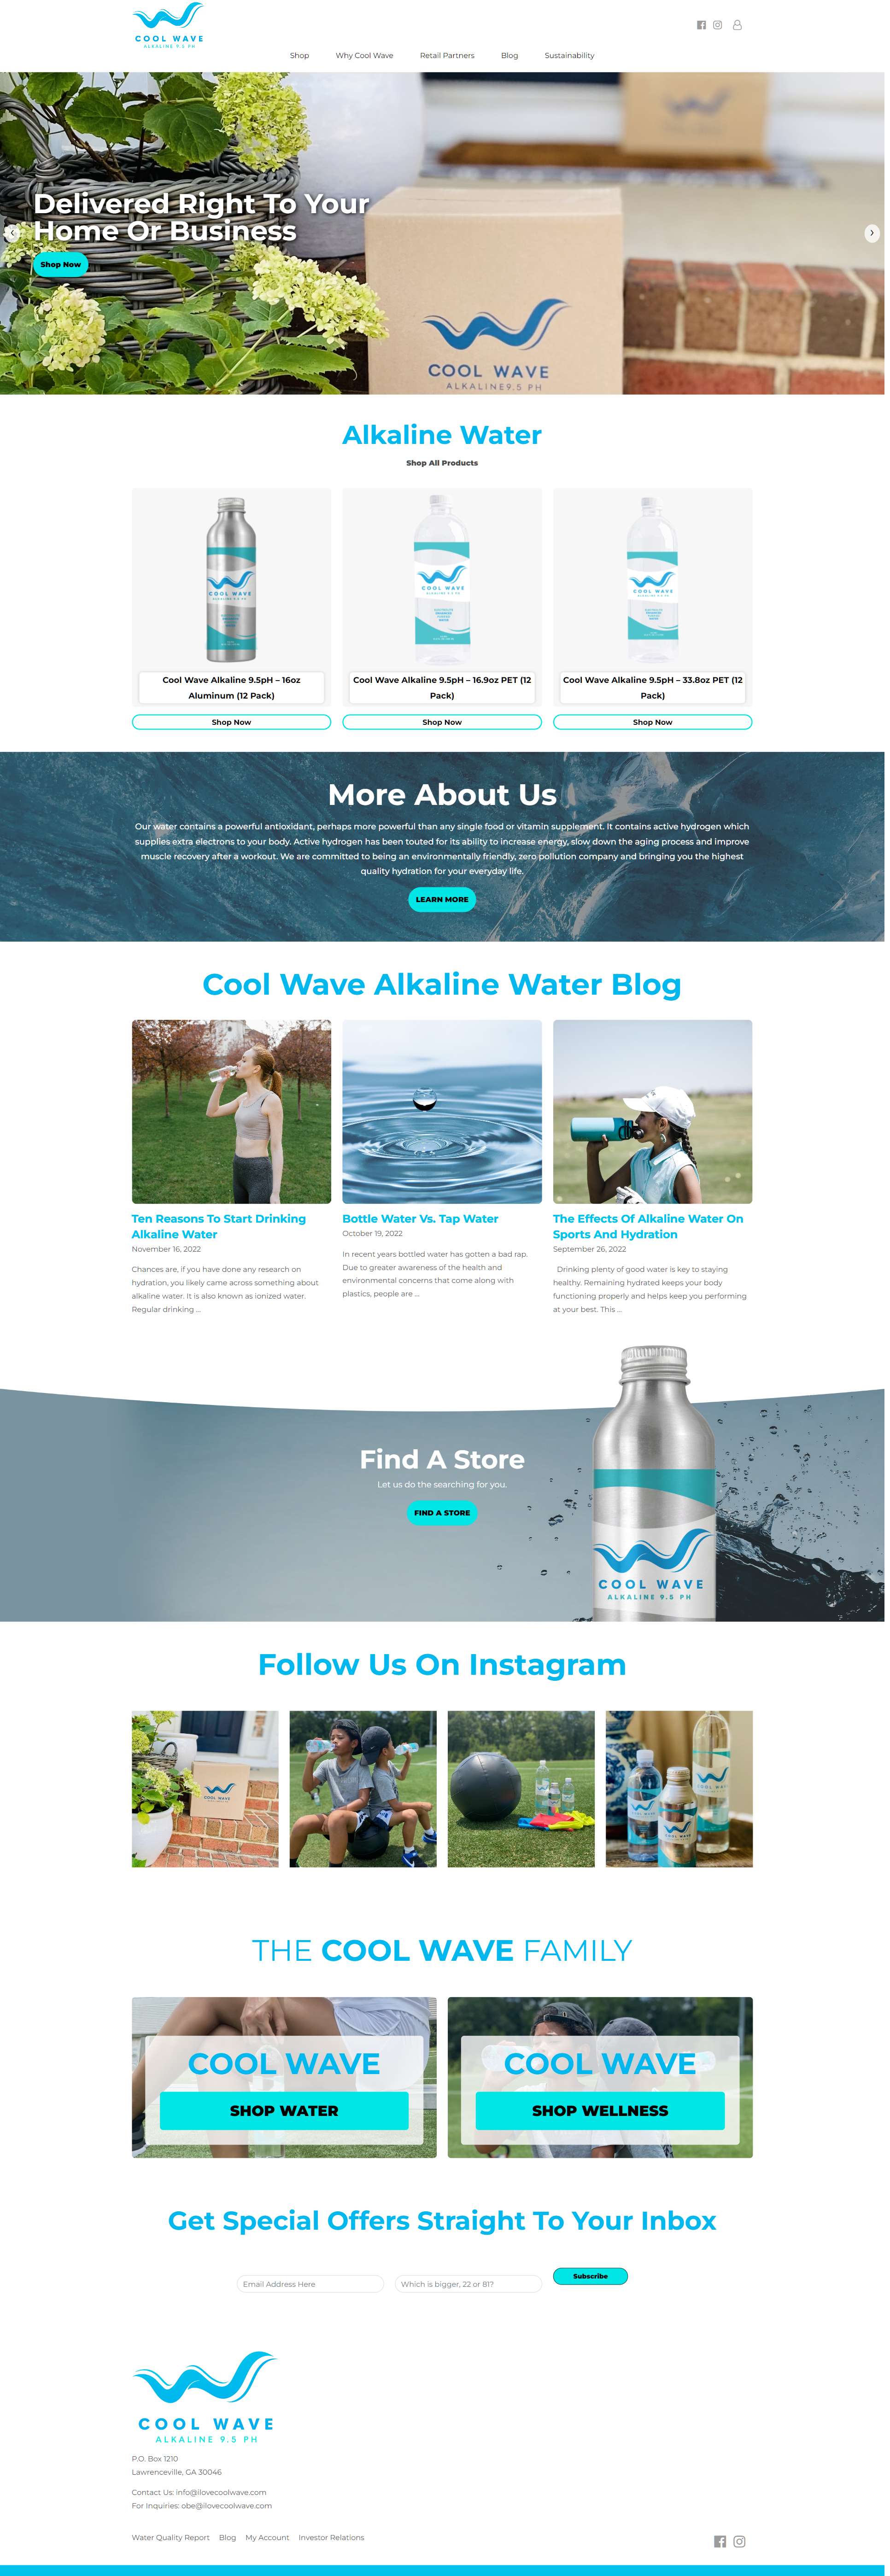 Cool Wave Alkaline Water